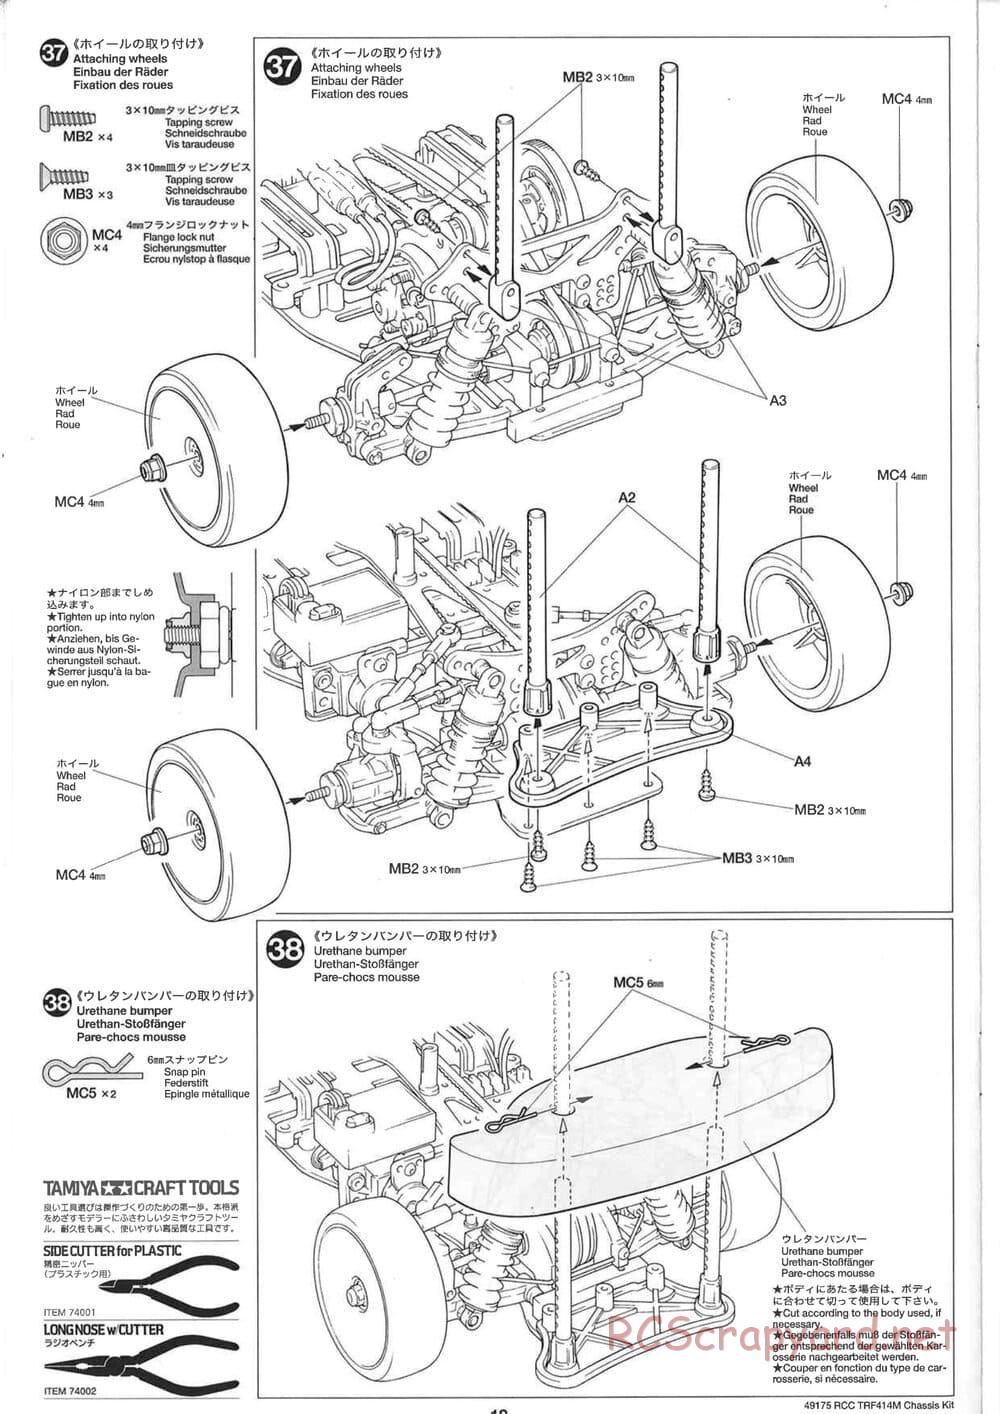 Tamiya - TRF414M Chassis - Manual - Page 18